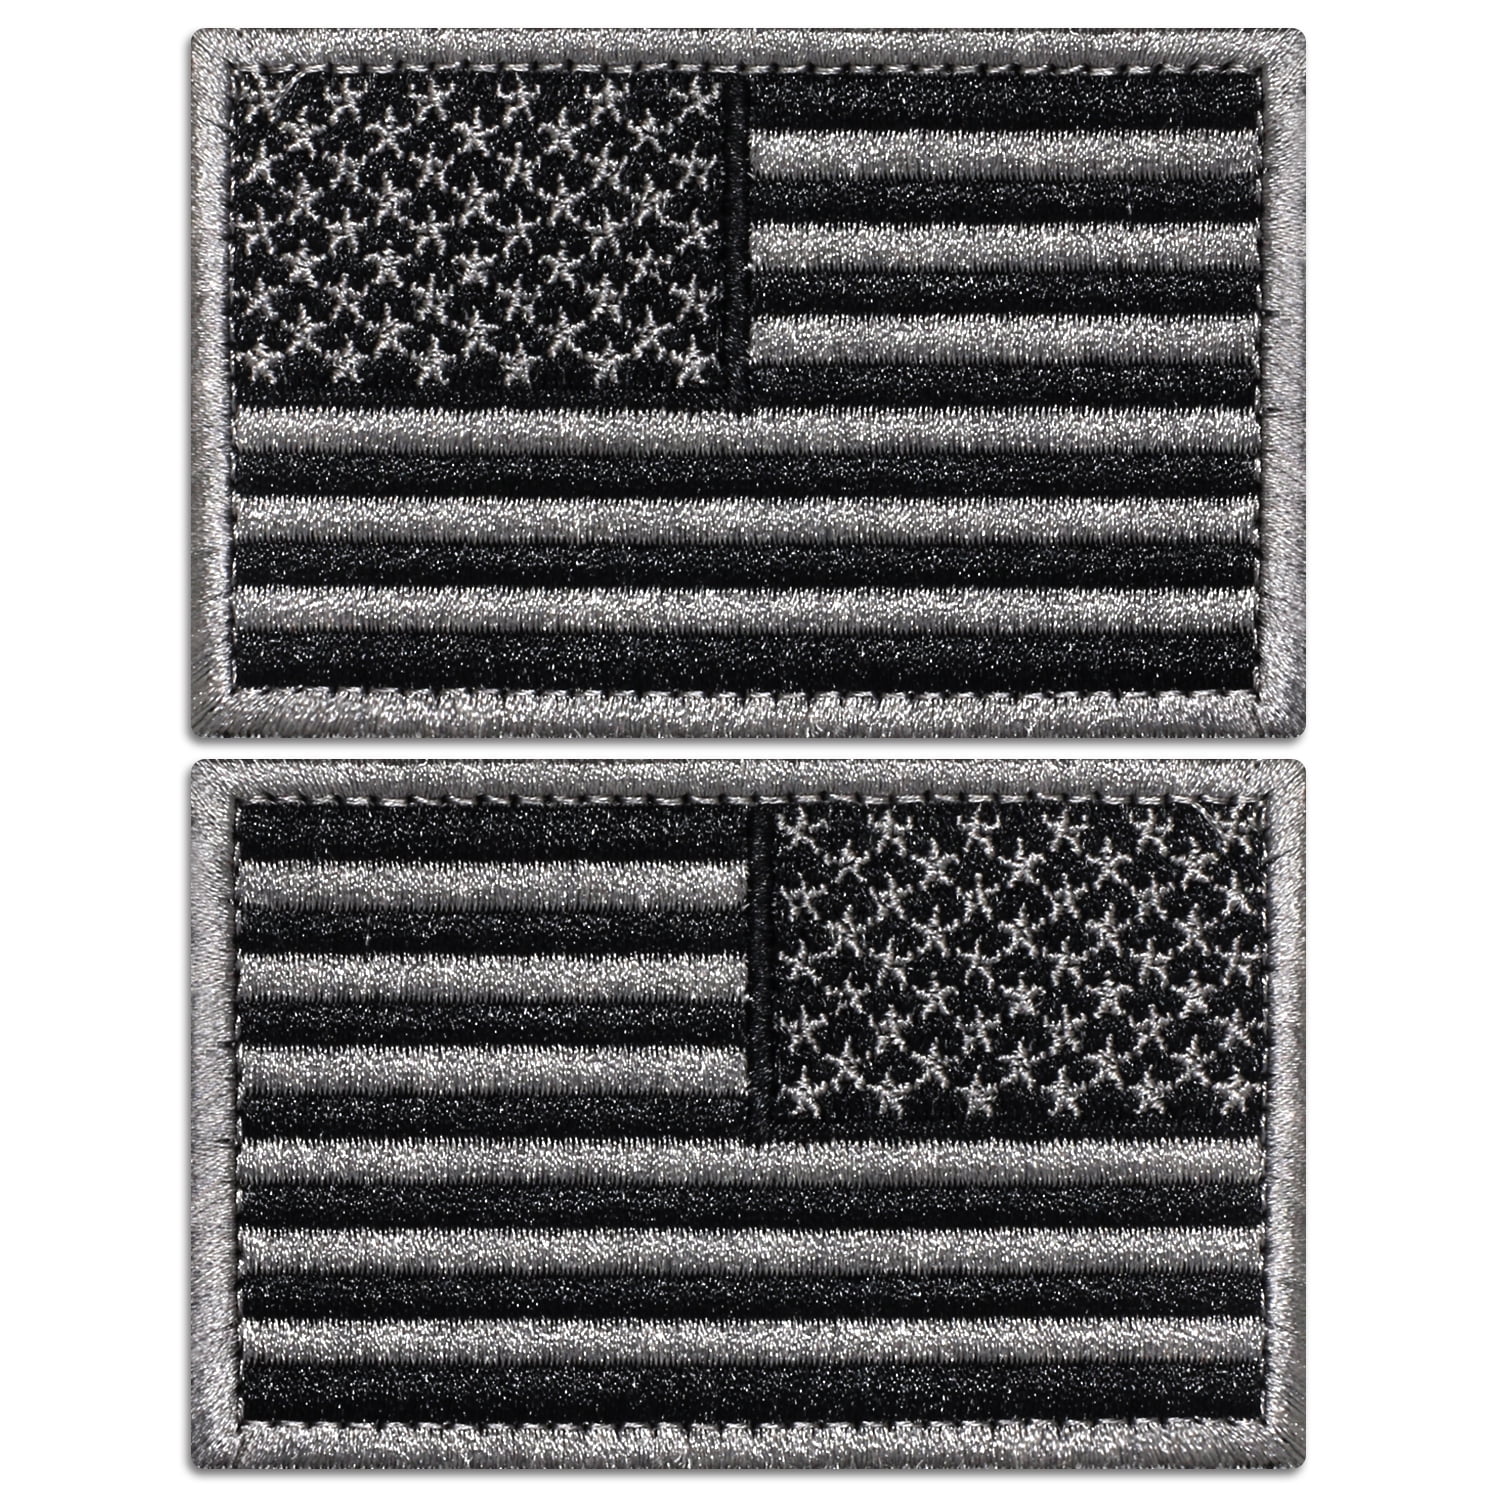 USA AMERICAN FLAG TACTICAL US MORALE MILITARY DESERT FASTEN PATCH AF-2 